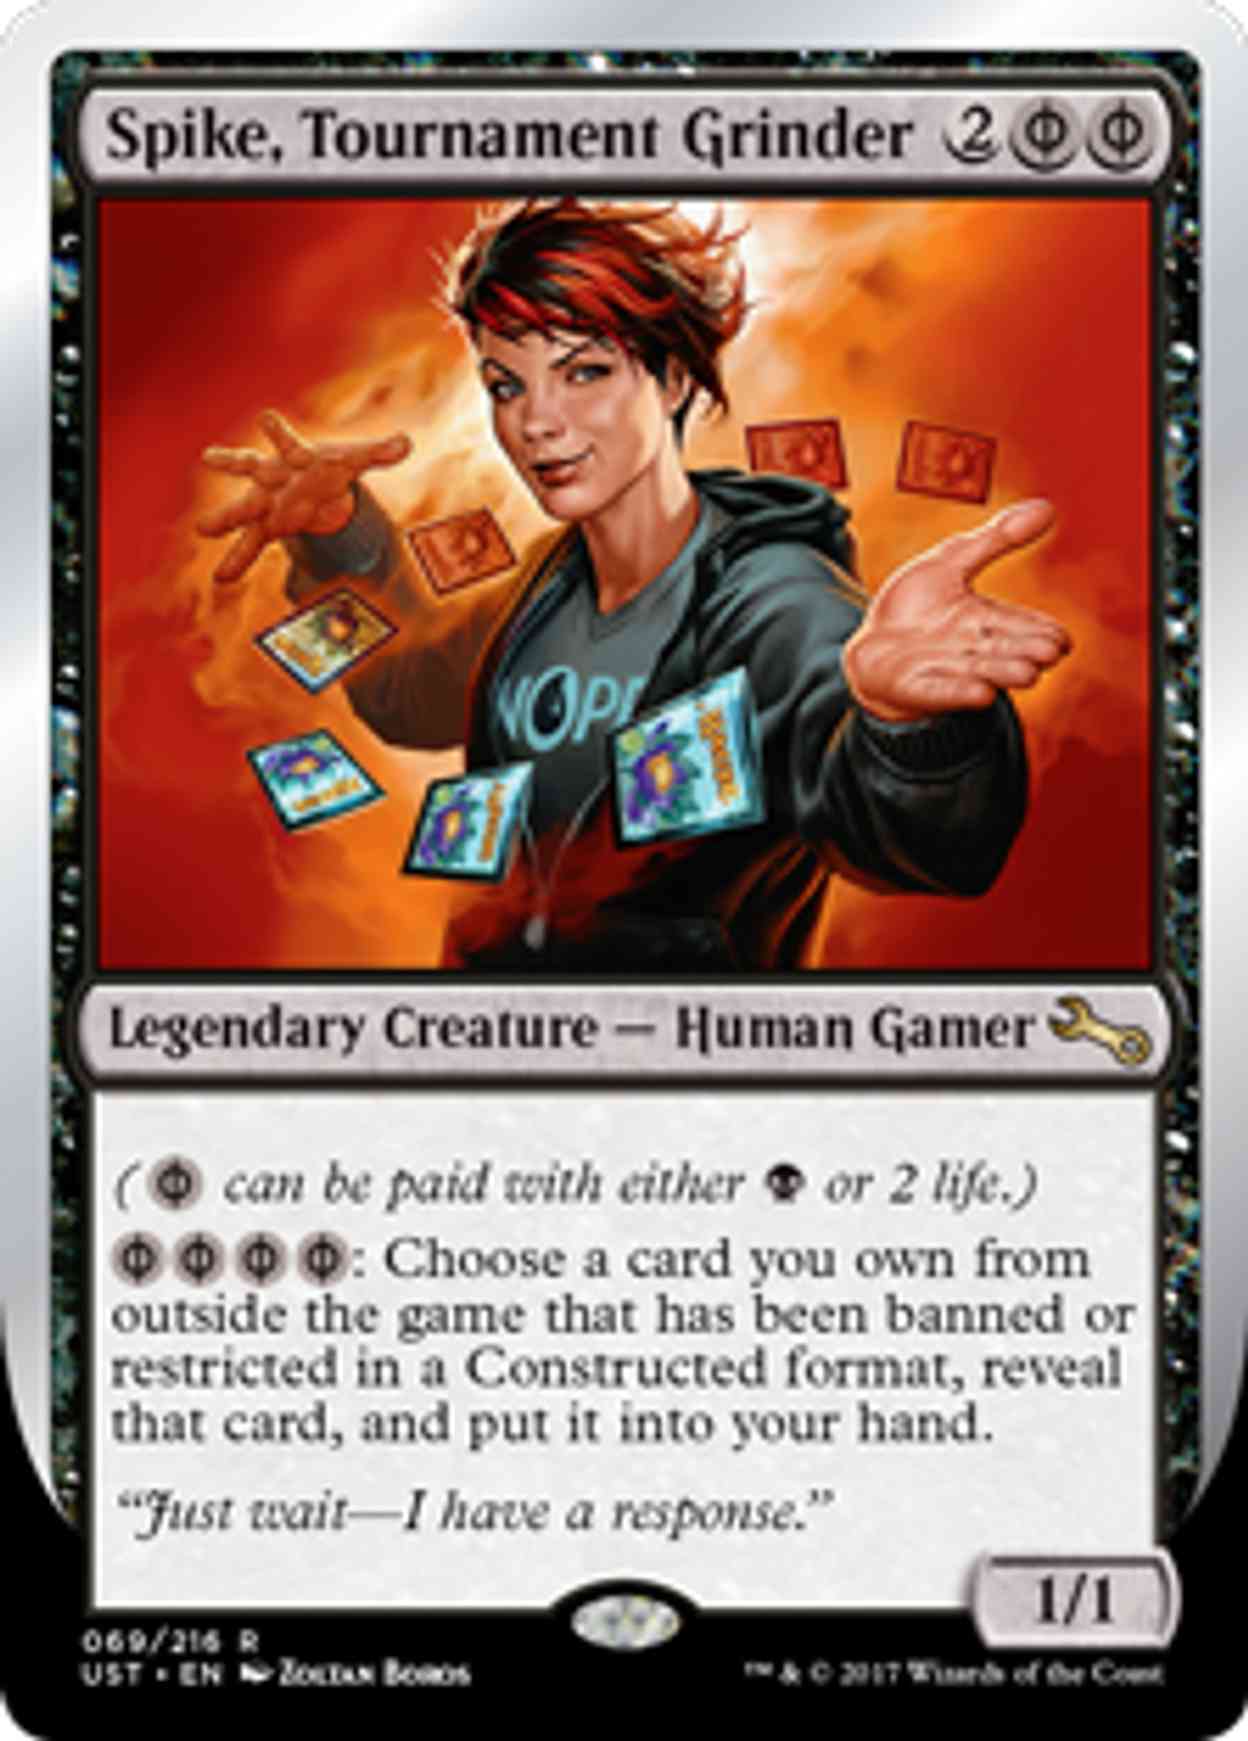 Spike, Tournament Grinder magic card front